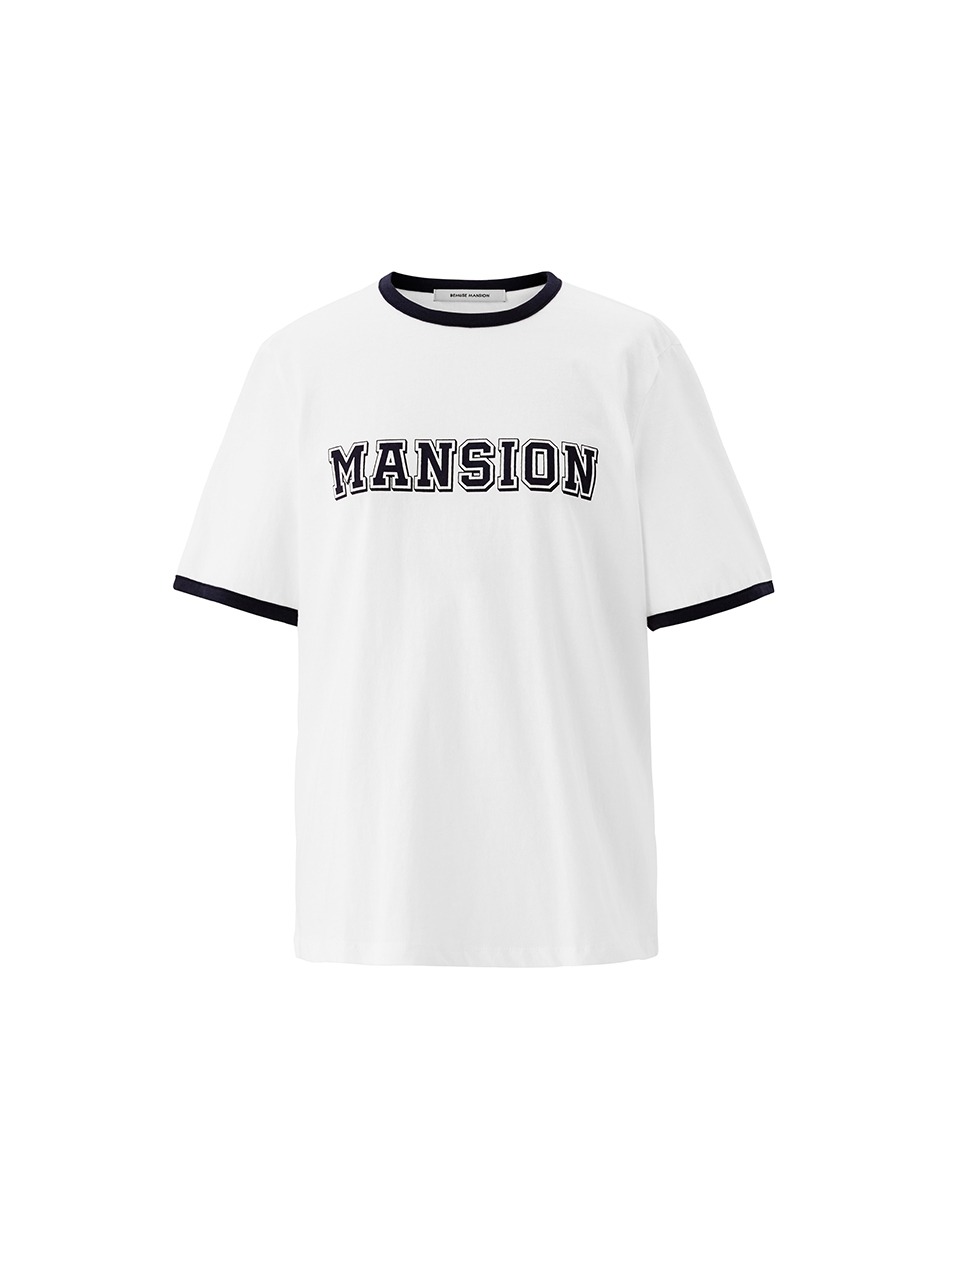 [REFURB SALE] Mansion binding tee - Off white